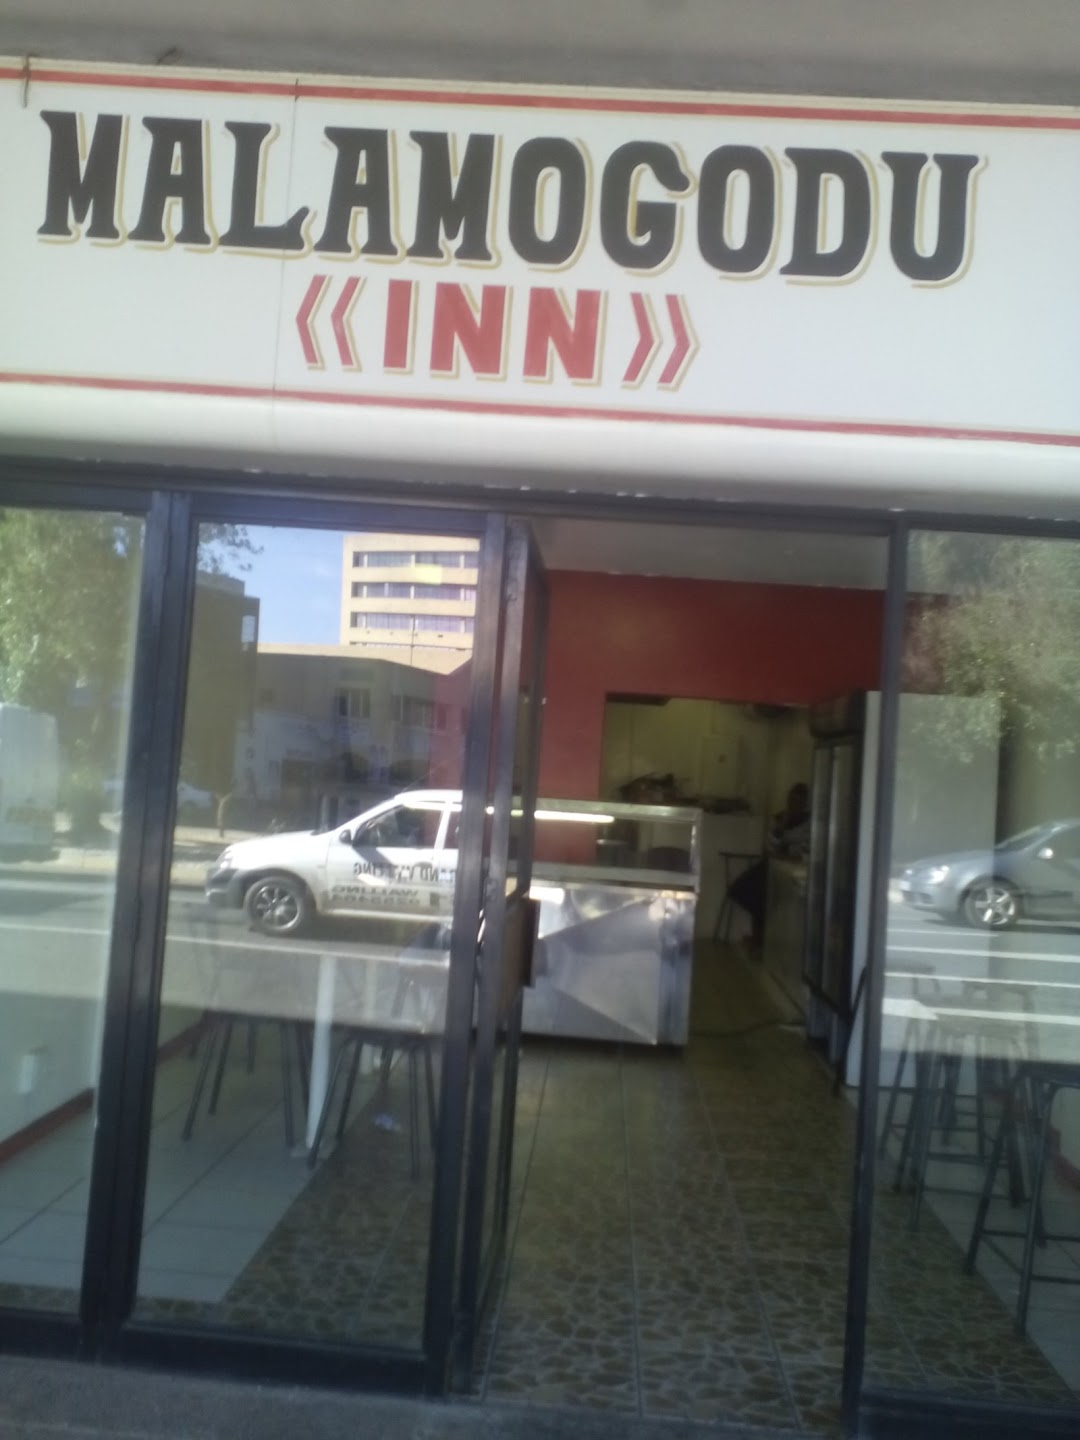 Malamogodu Inn